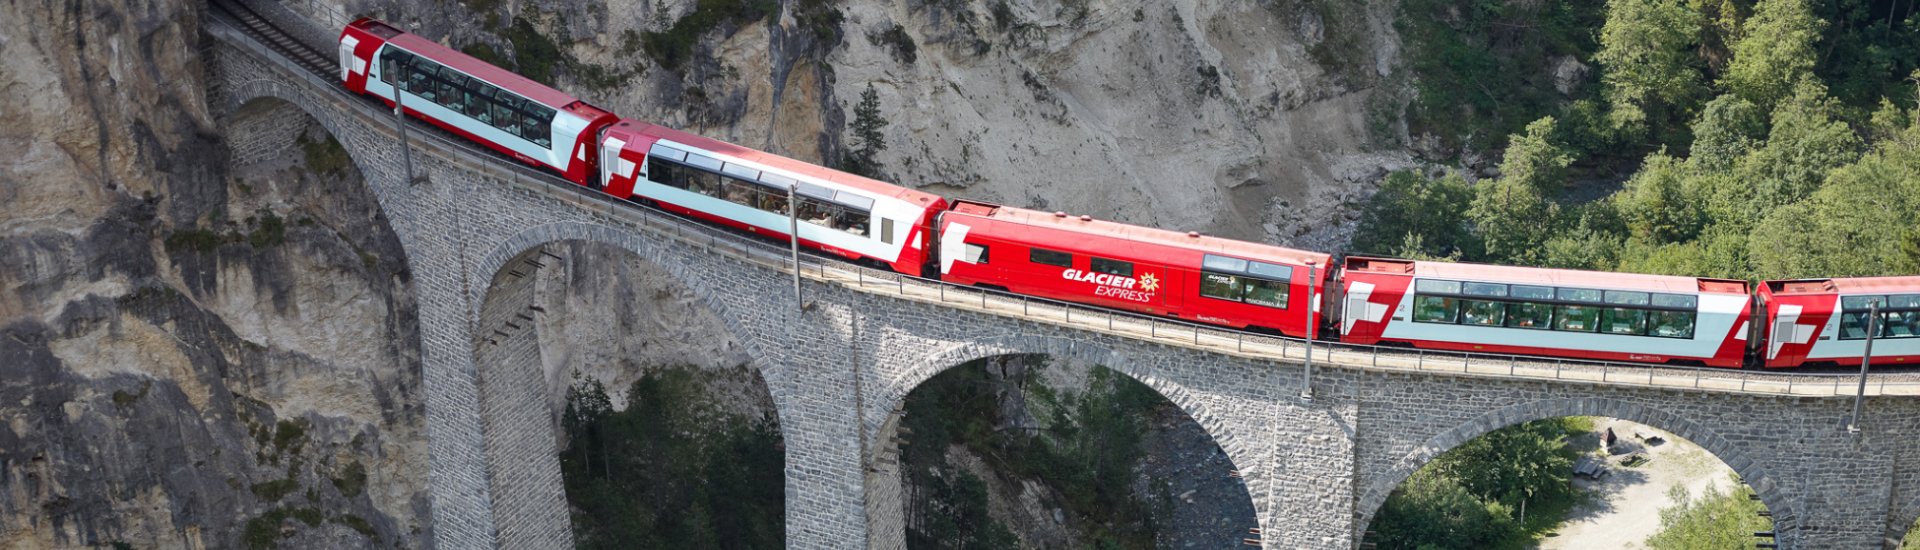 luxury train travel through switzerland